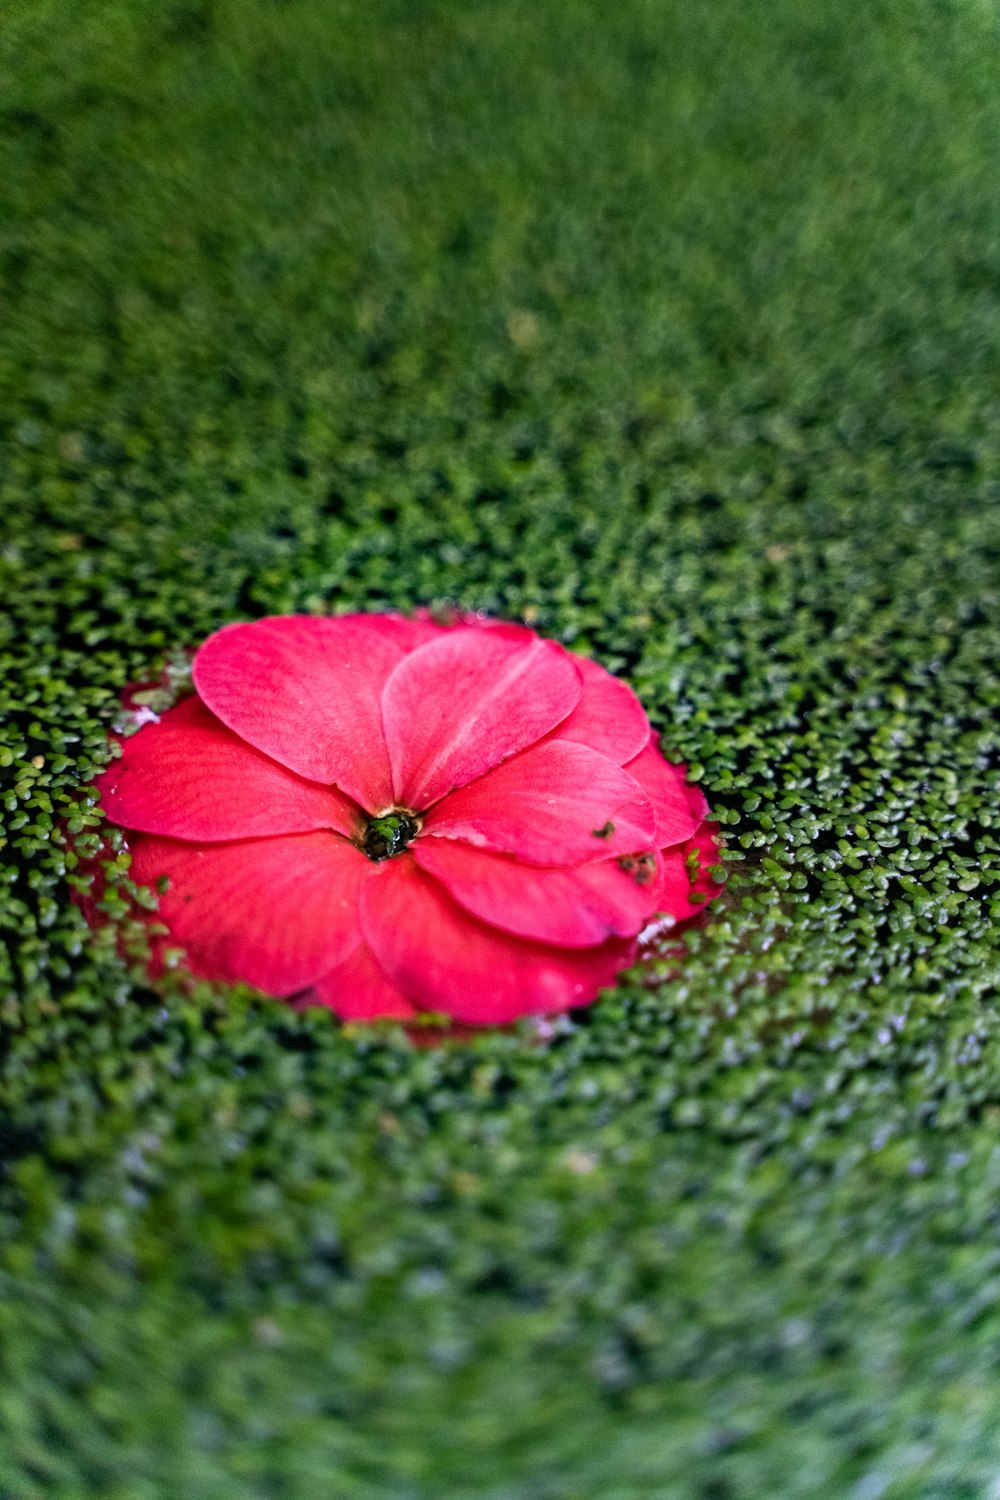 a red flower on grass